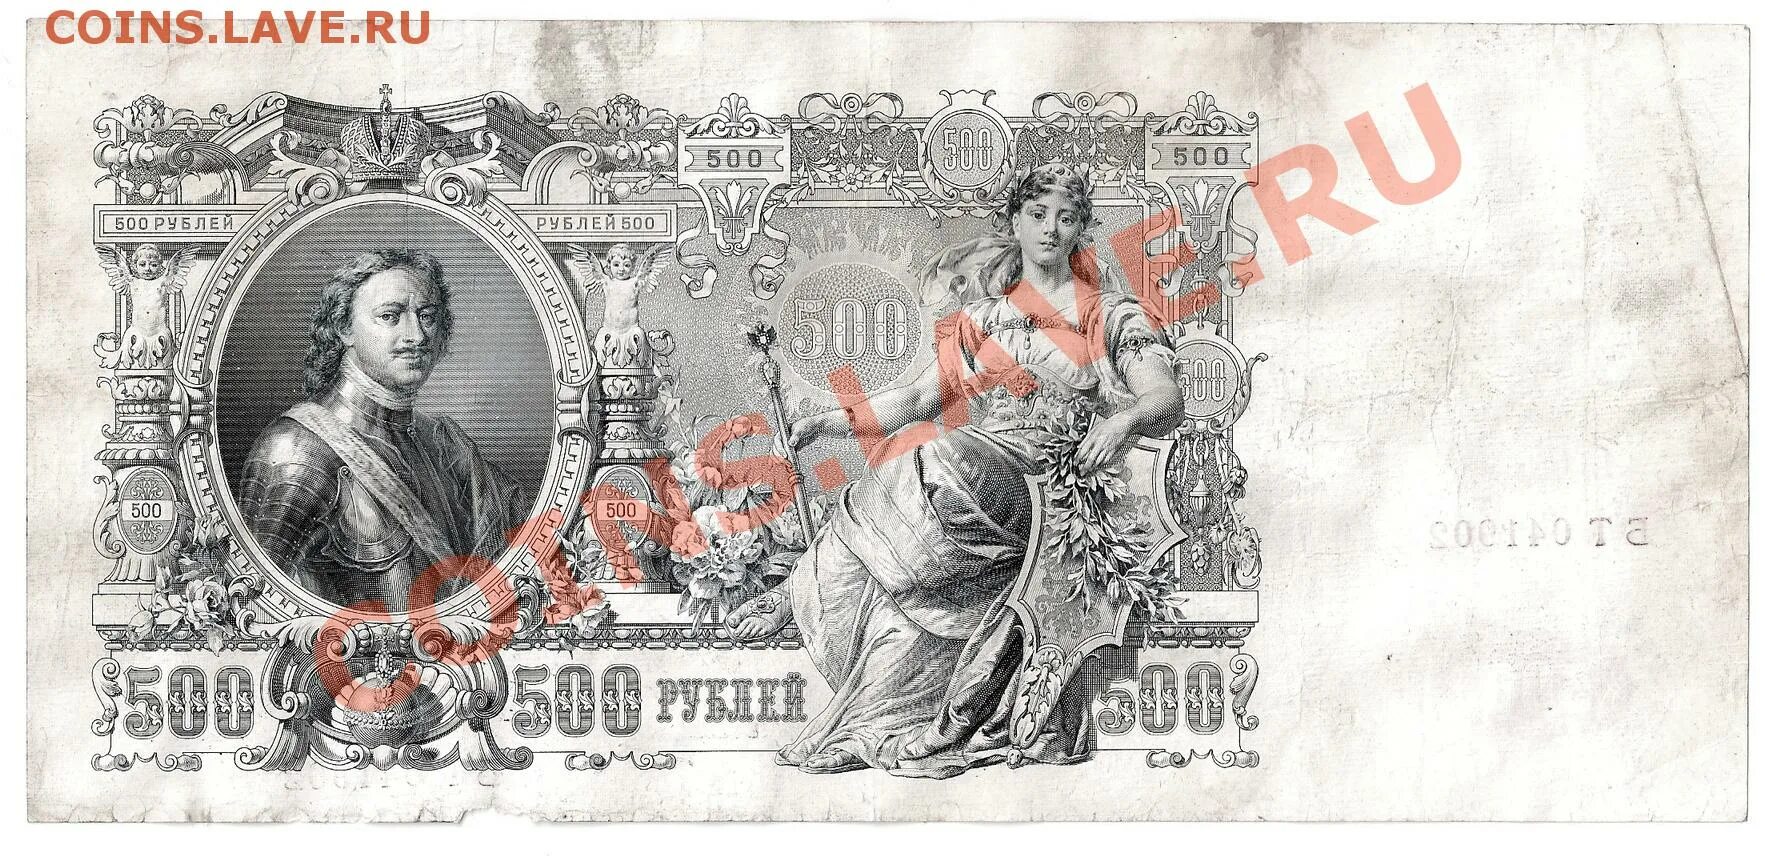 30 от 500 рублей. 500 Рублей 1912. 500 Рублей с Петром 1. 500 Рублей Николая 2 1912 года.